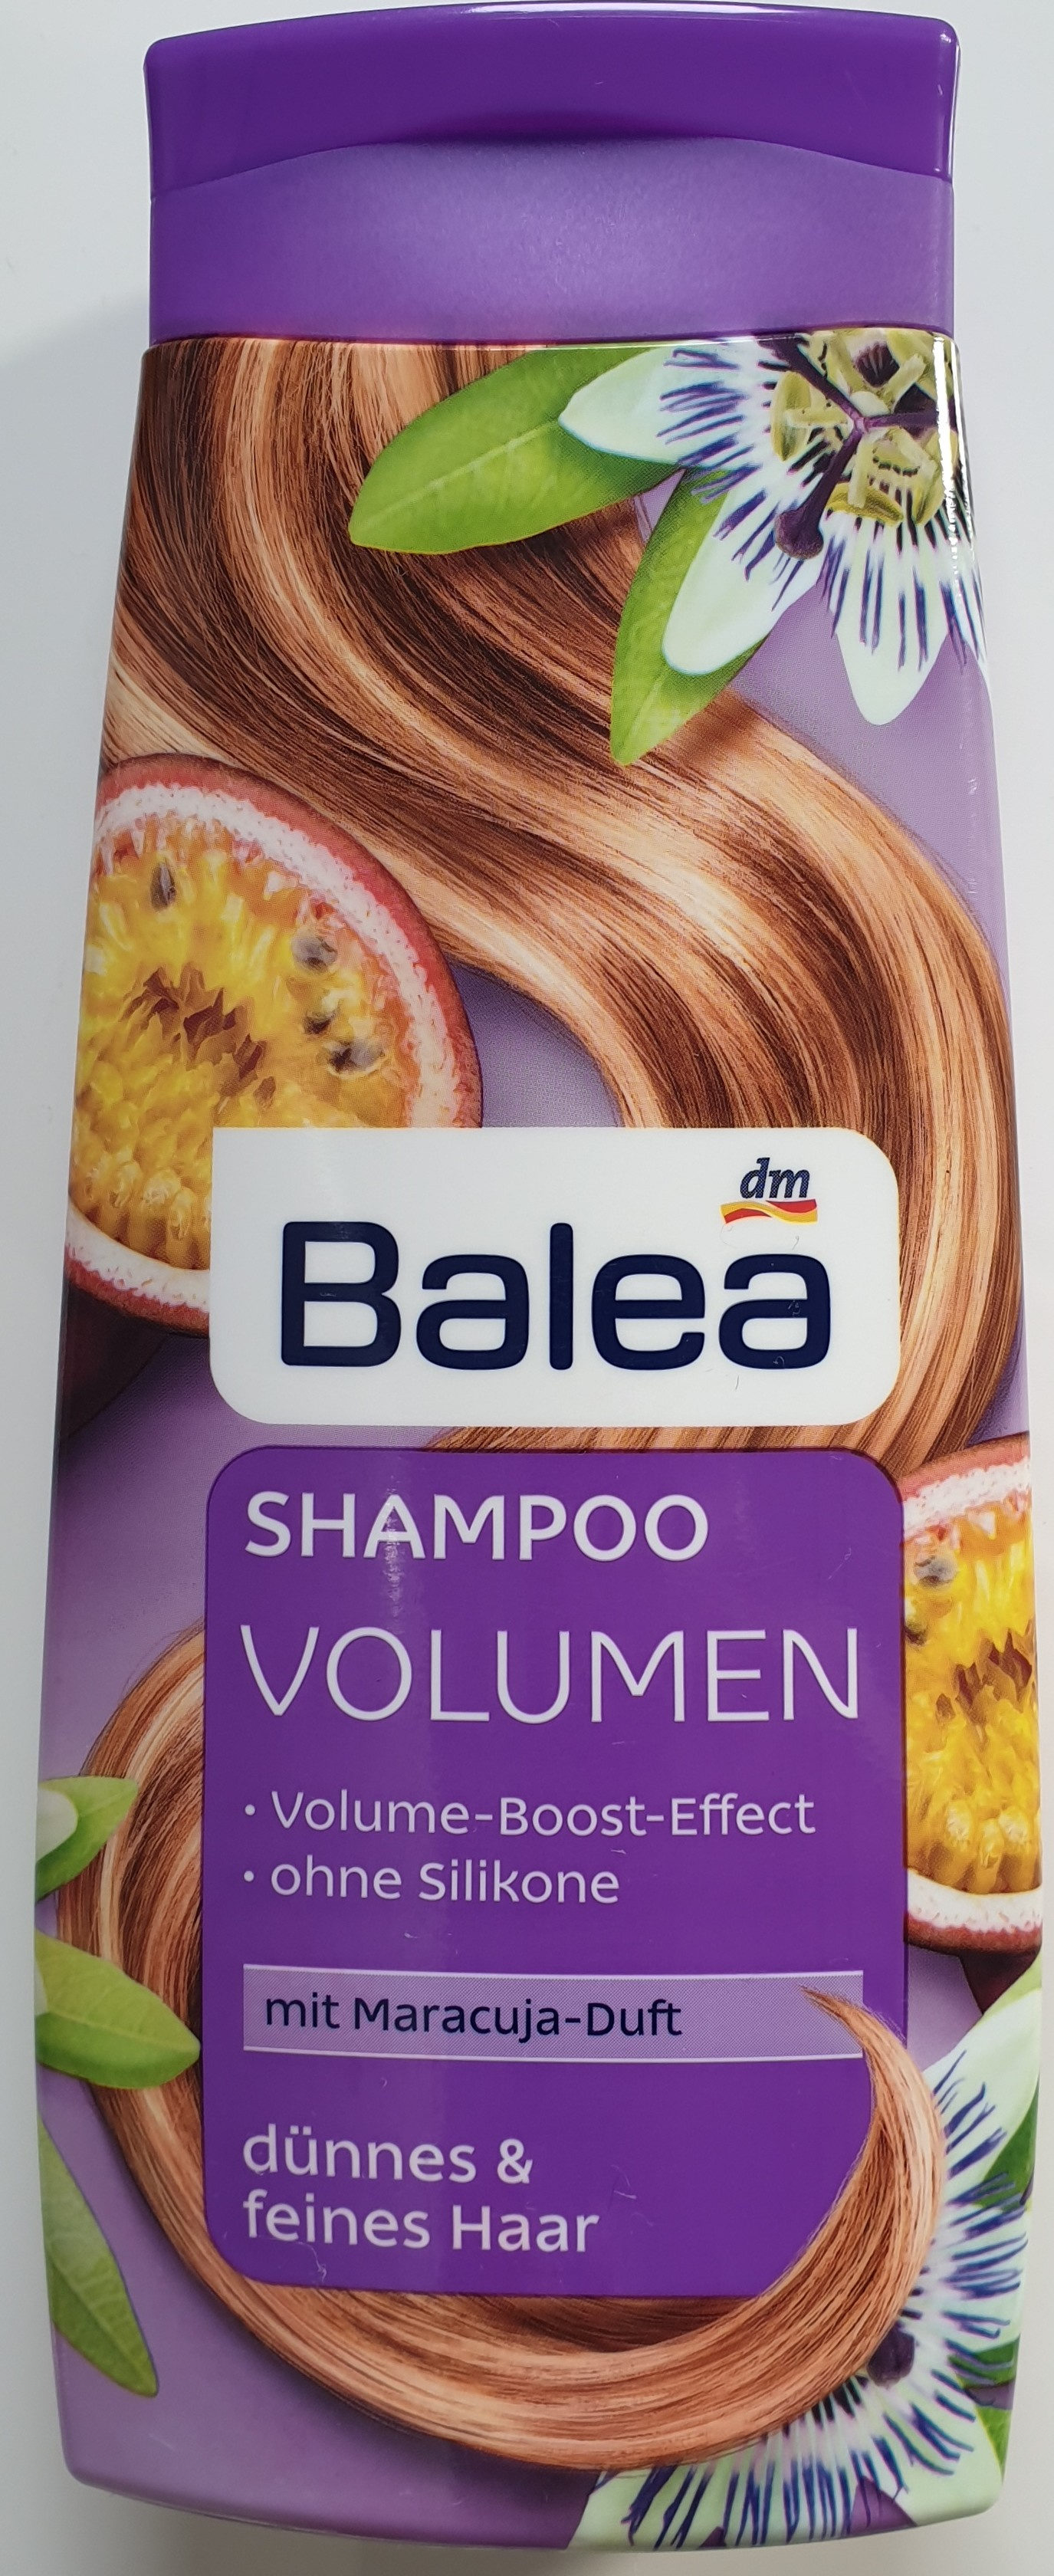 Shampoo Volumen mit Maracuja-Duft - Produkt - de